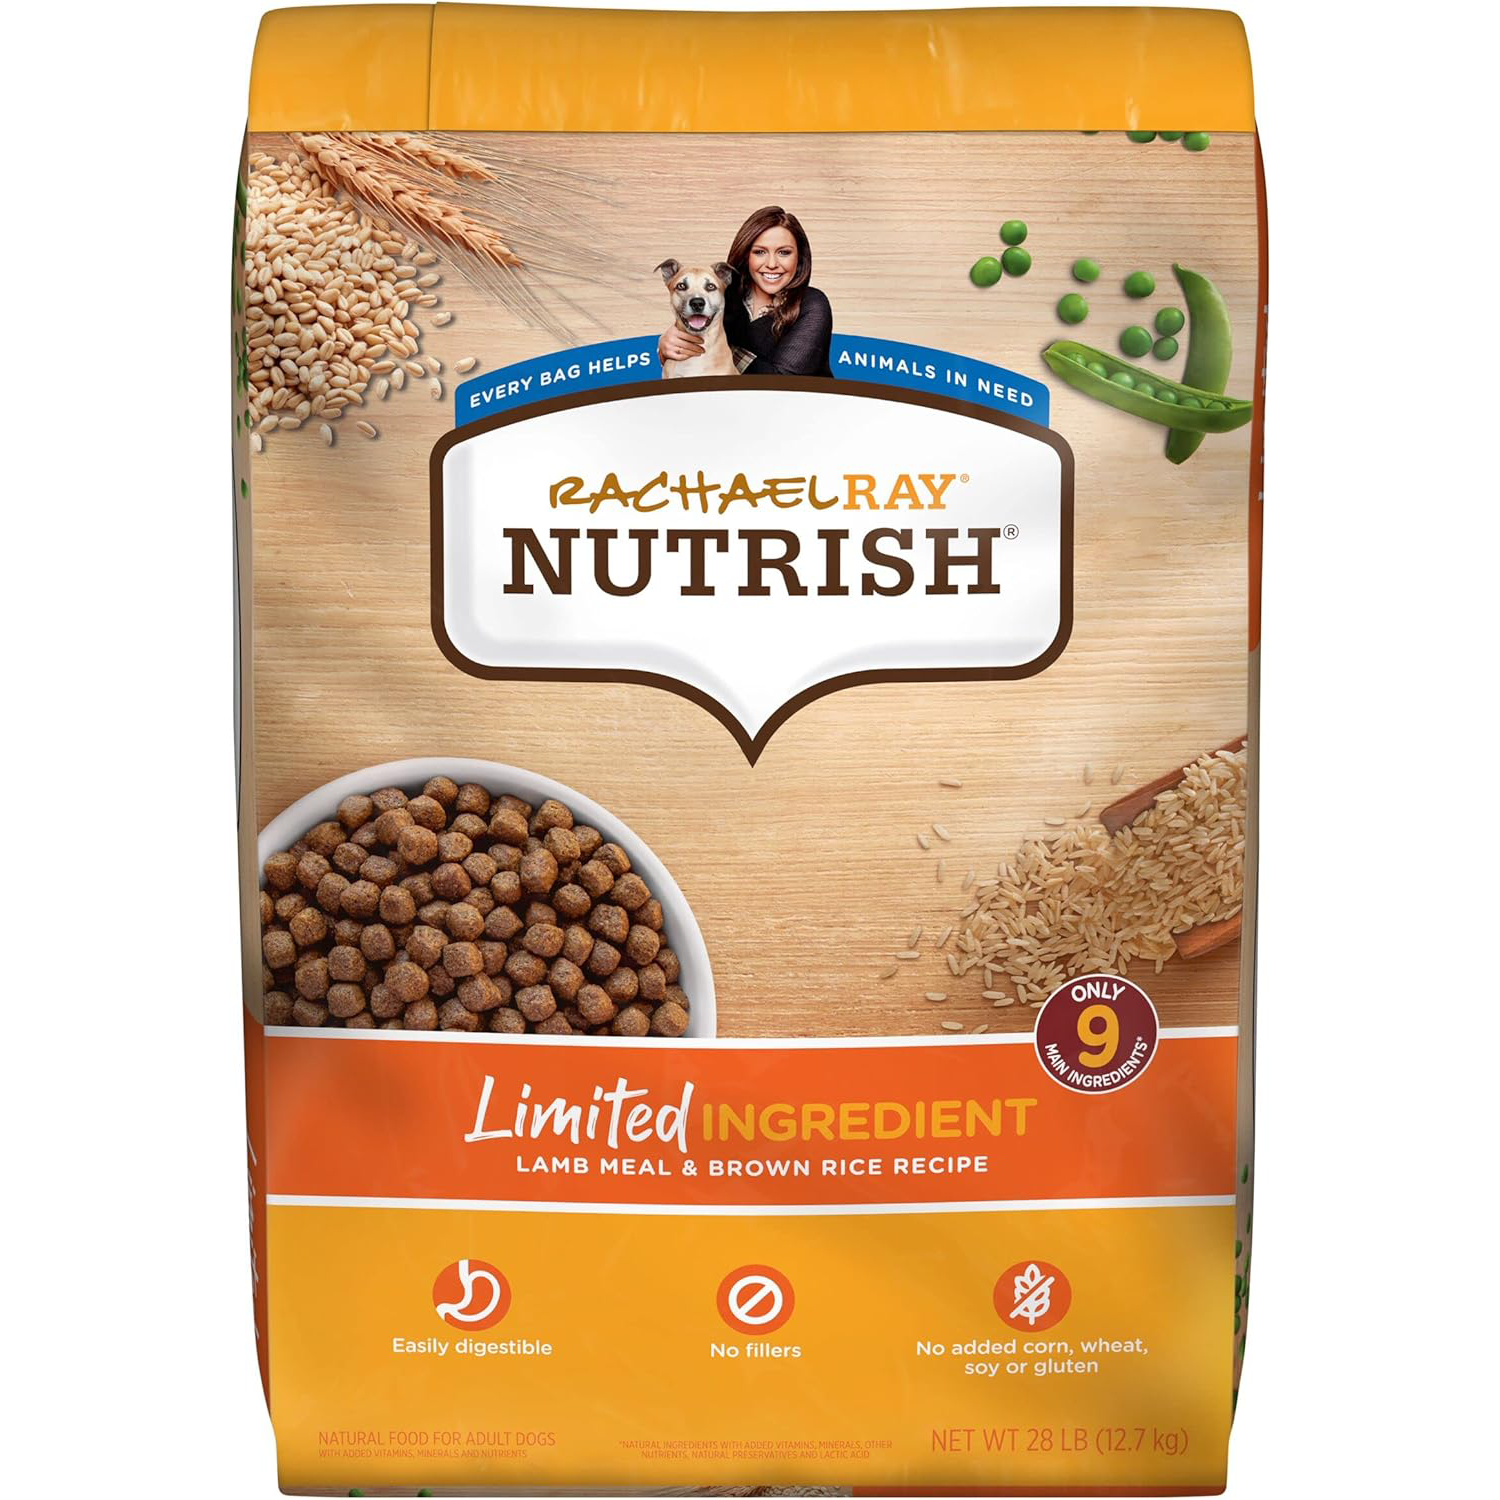 Rachael Ray Nutrish Limited Ingredient Dog Food